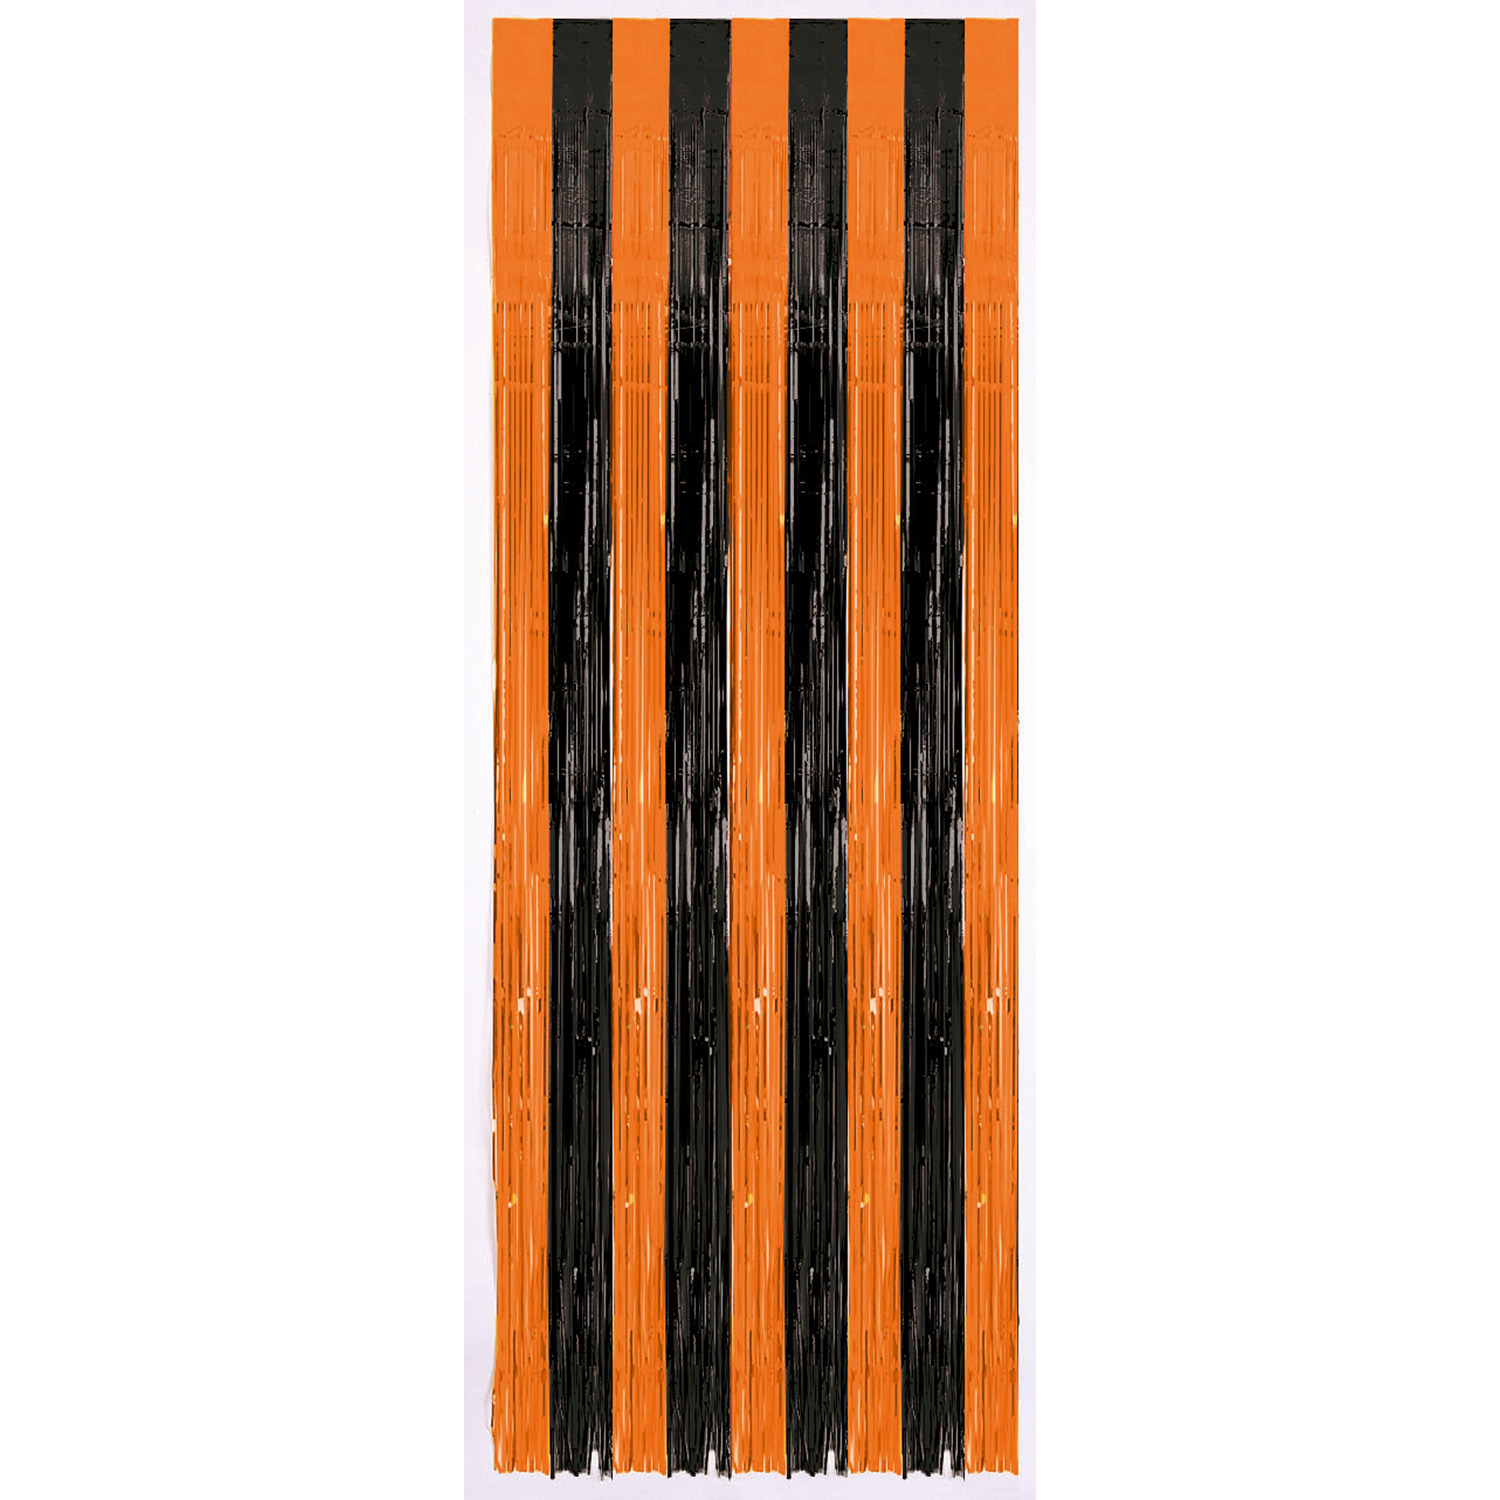 4x stuks folie deurgordijn zwart-oranje metallic 243 x 91 cm